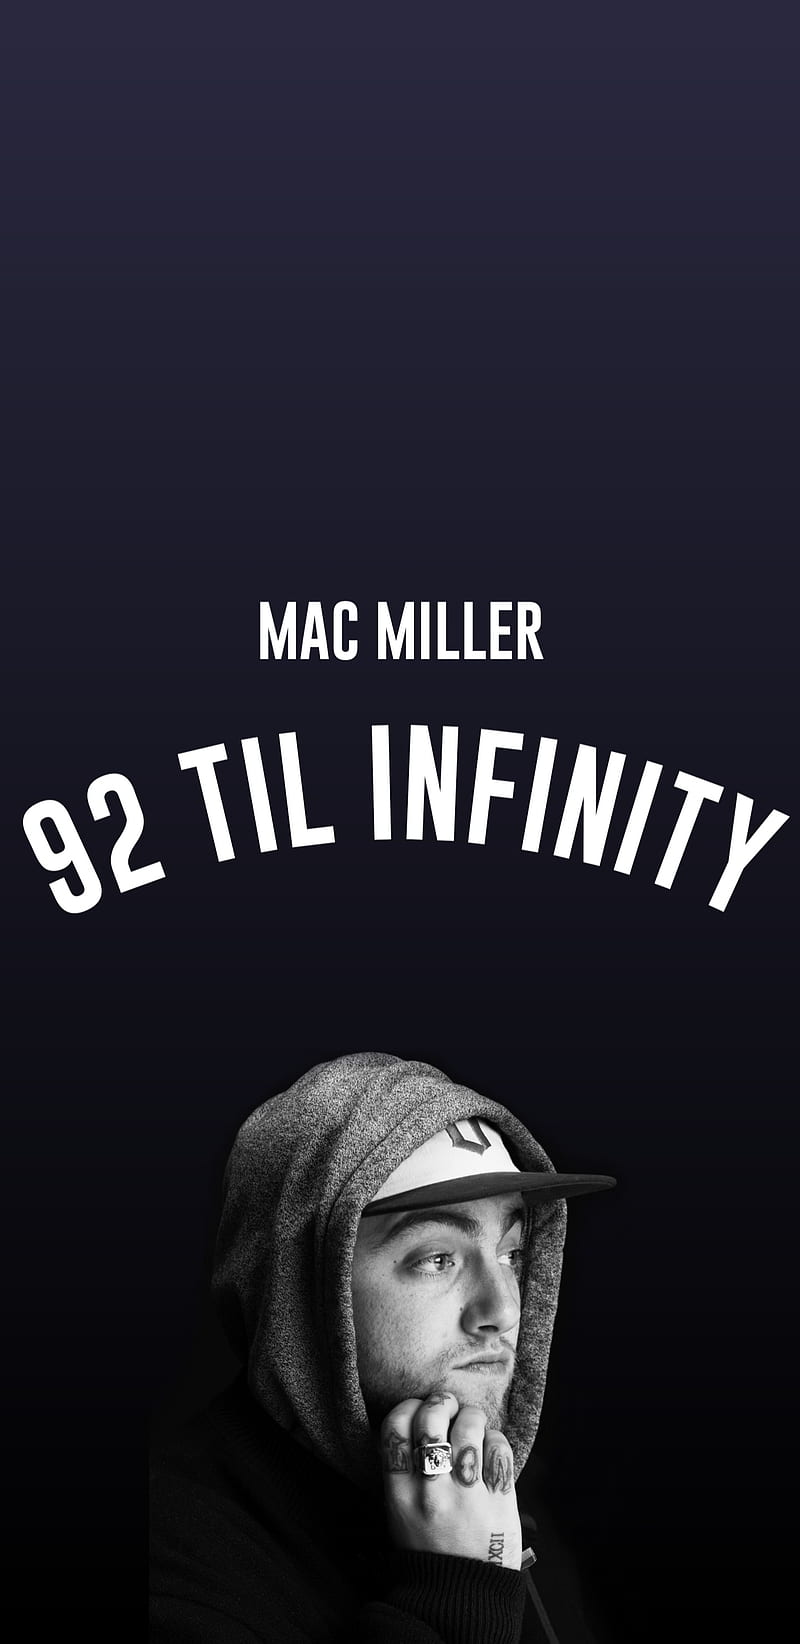 mac miller wallpaper for iphone